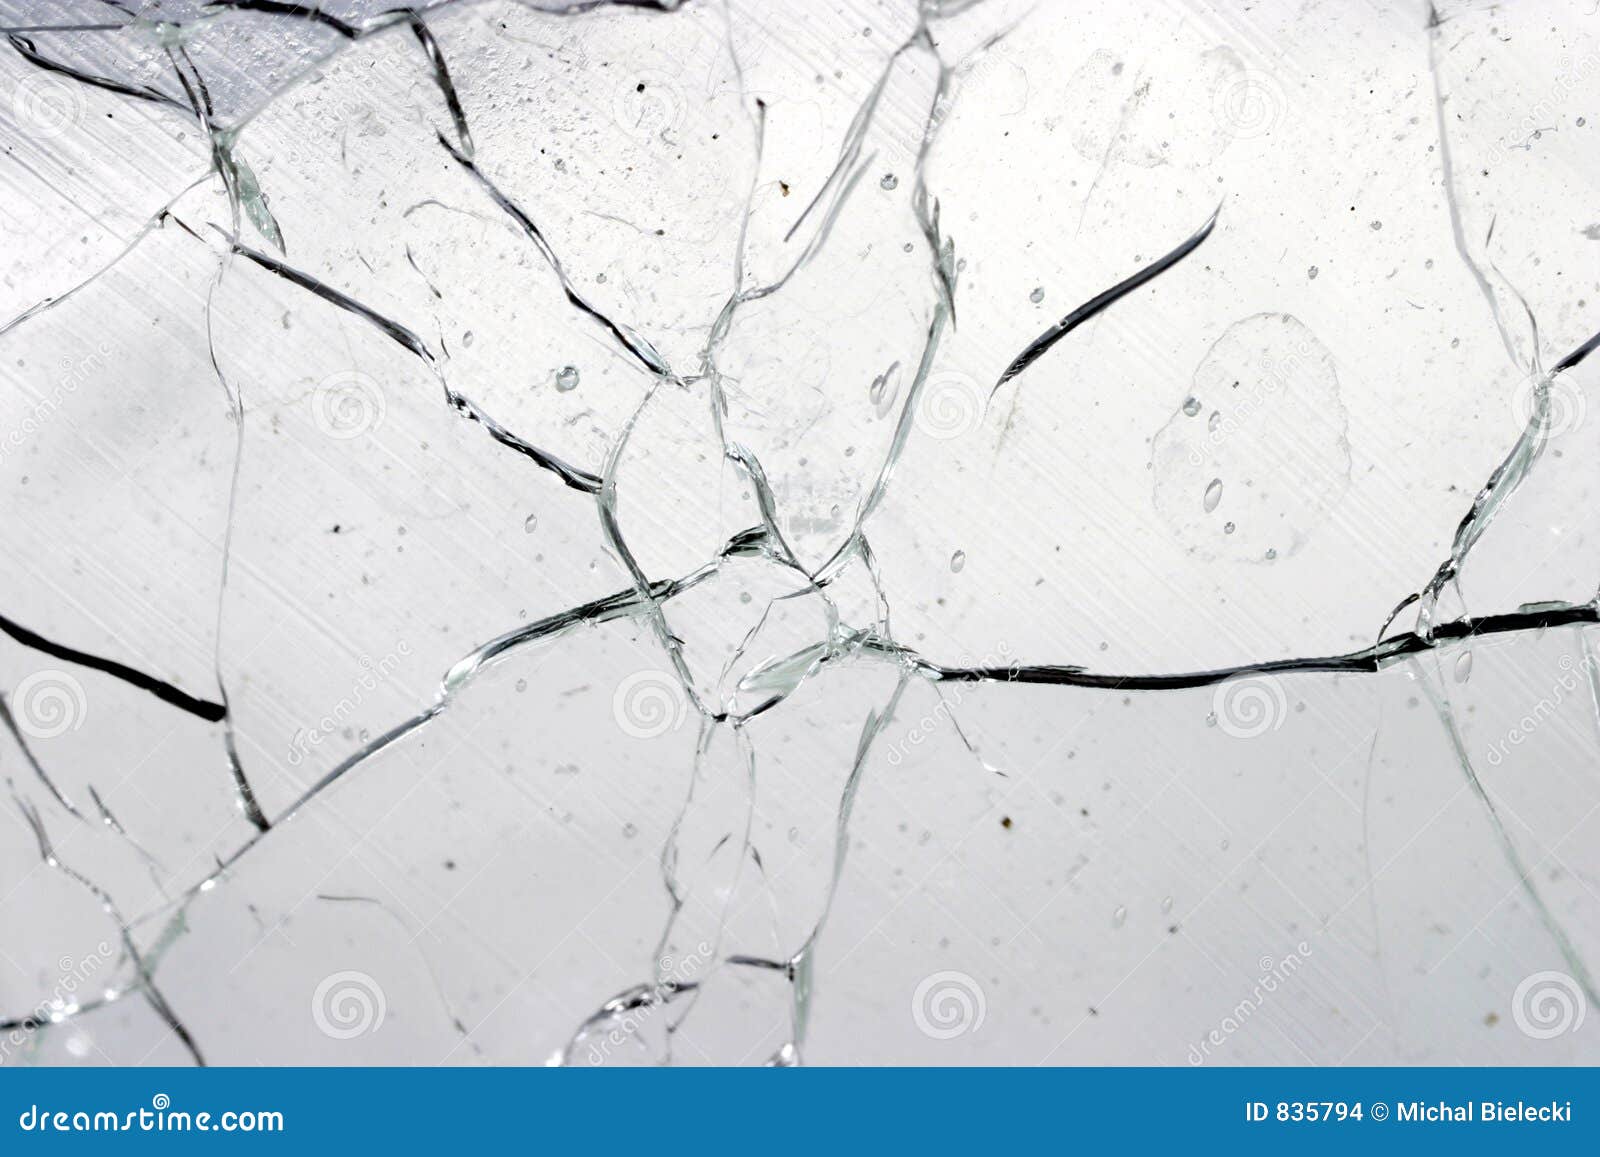 clip art shattered glass - photo #29